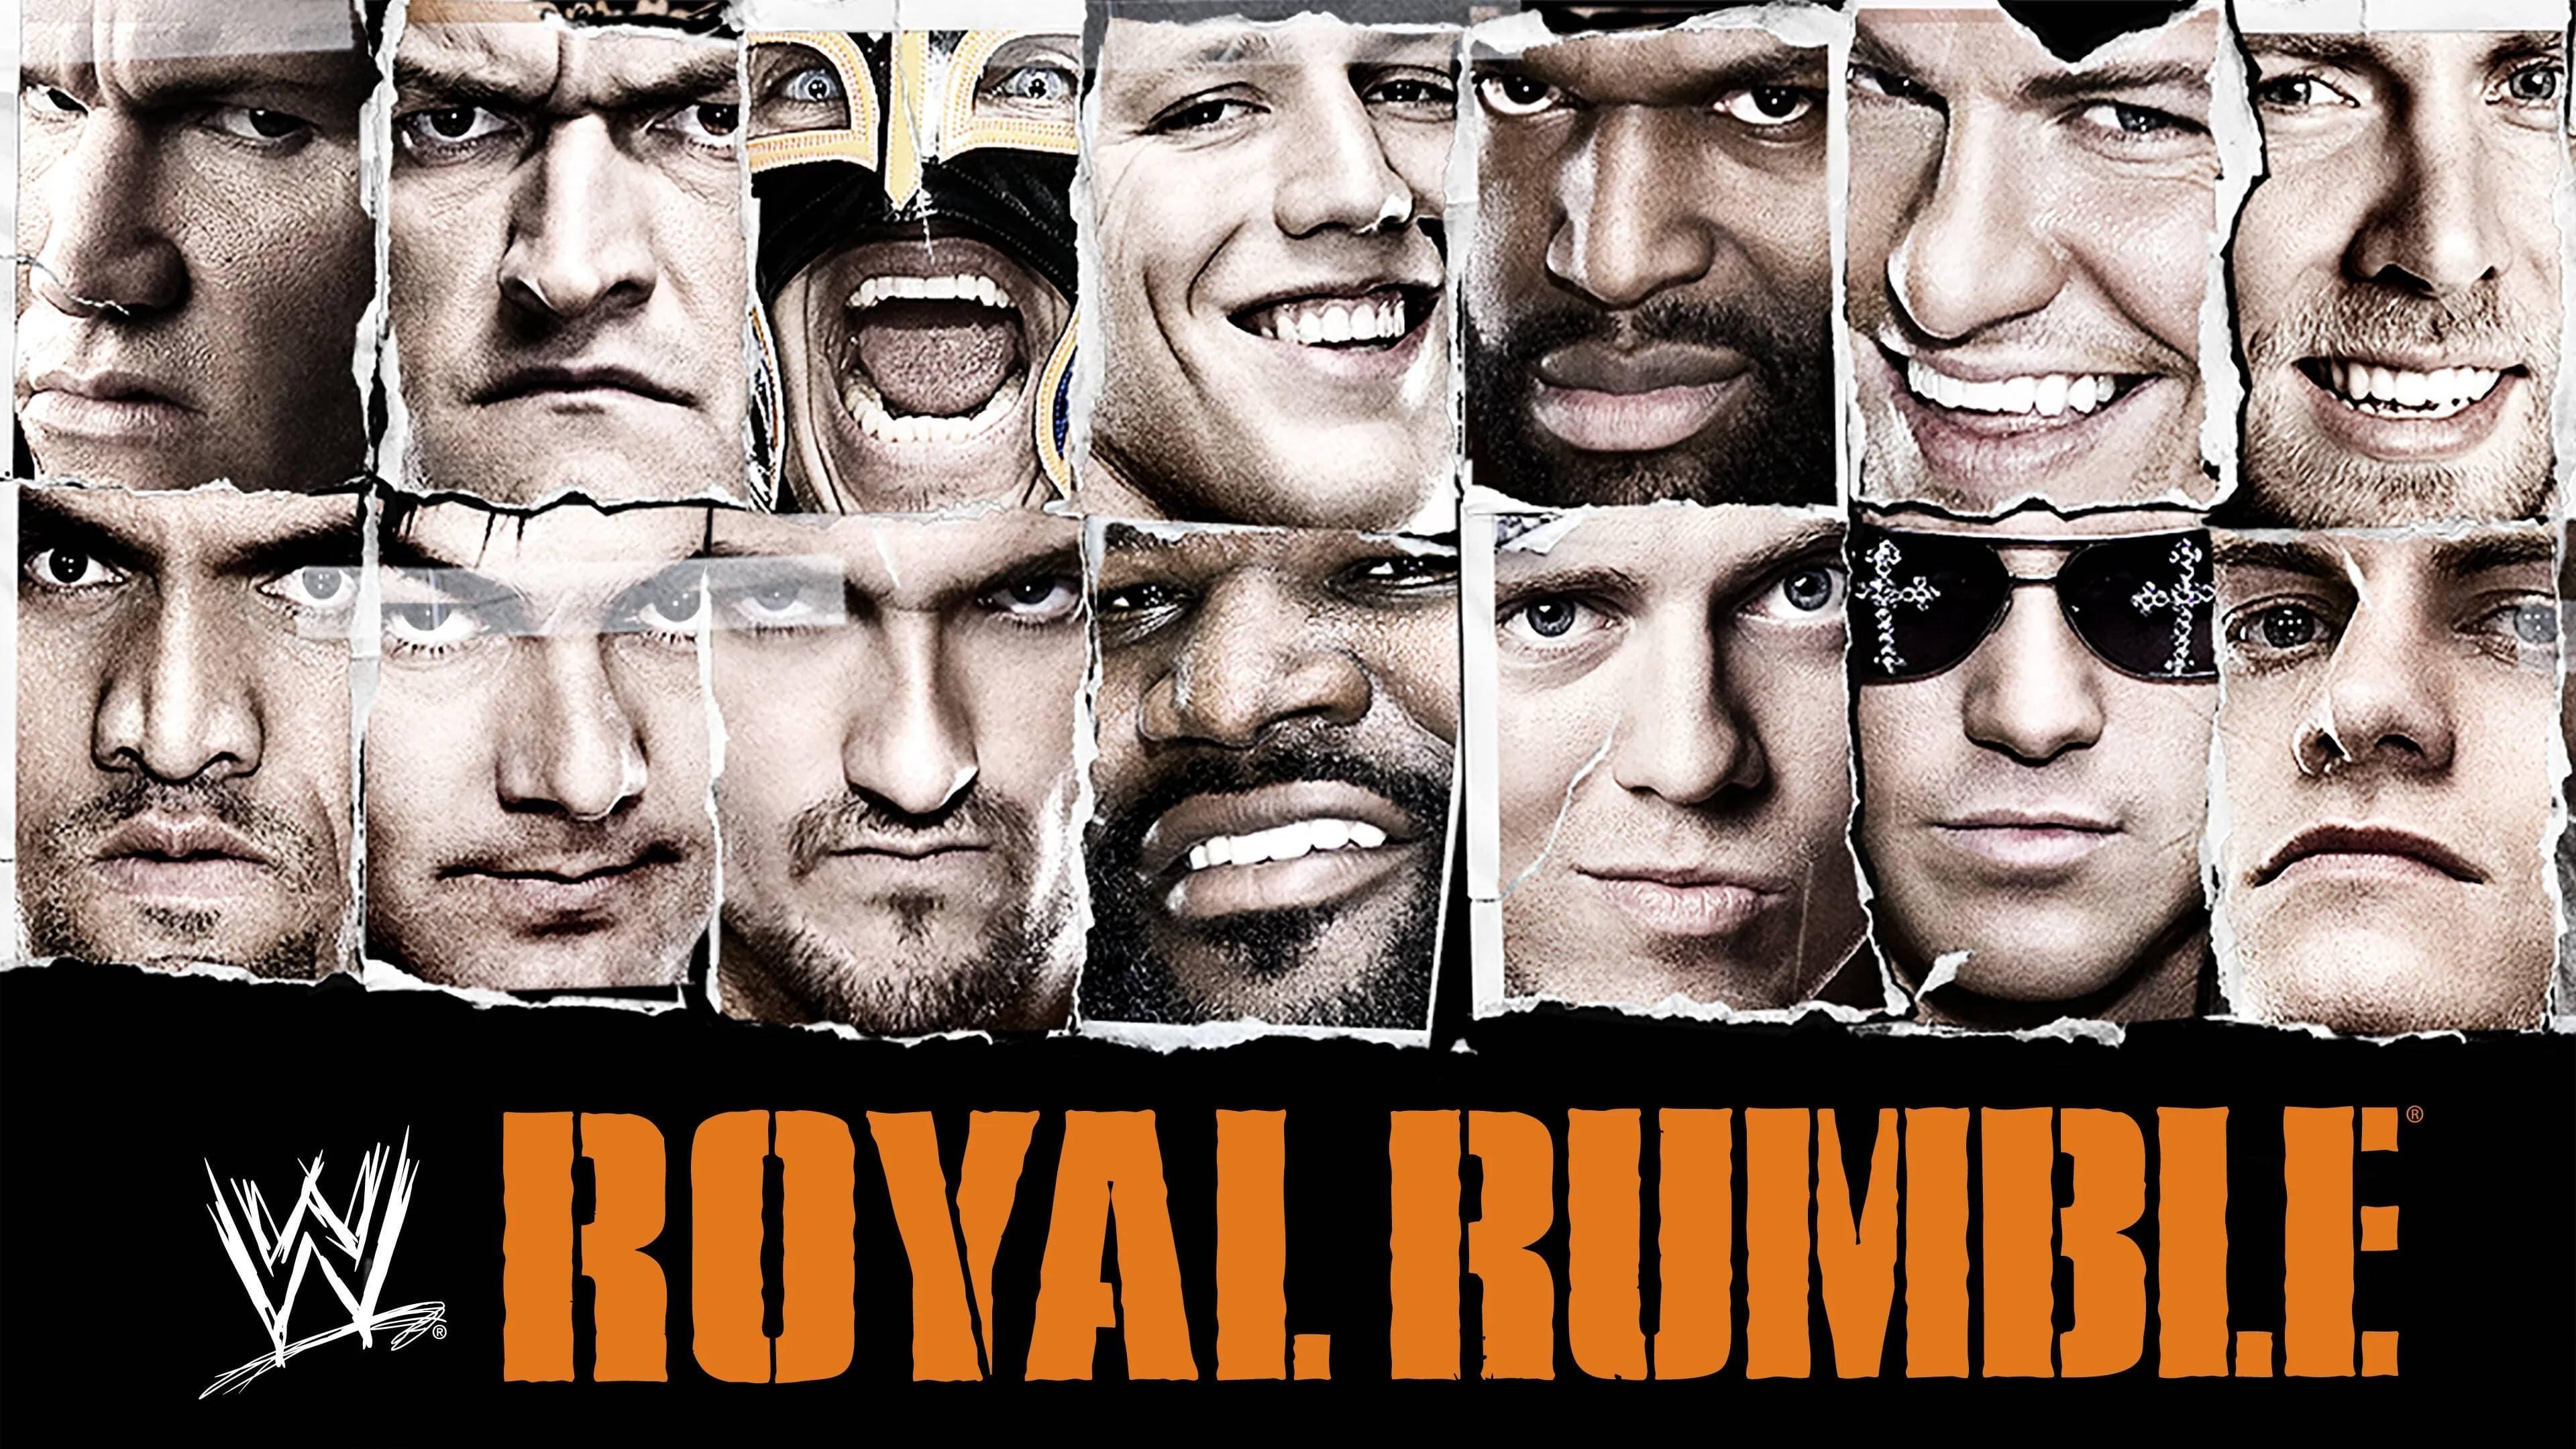 WWE Royal Rumble 2011 backdrop